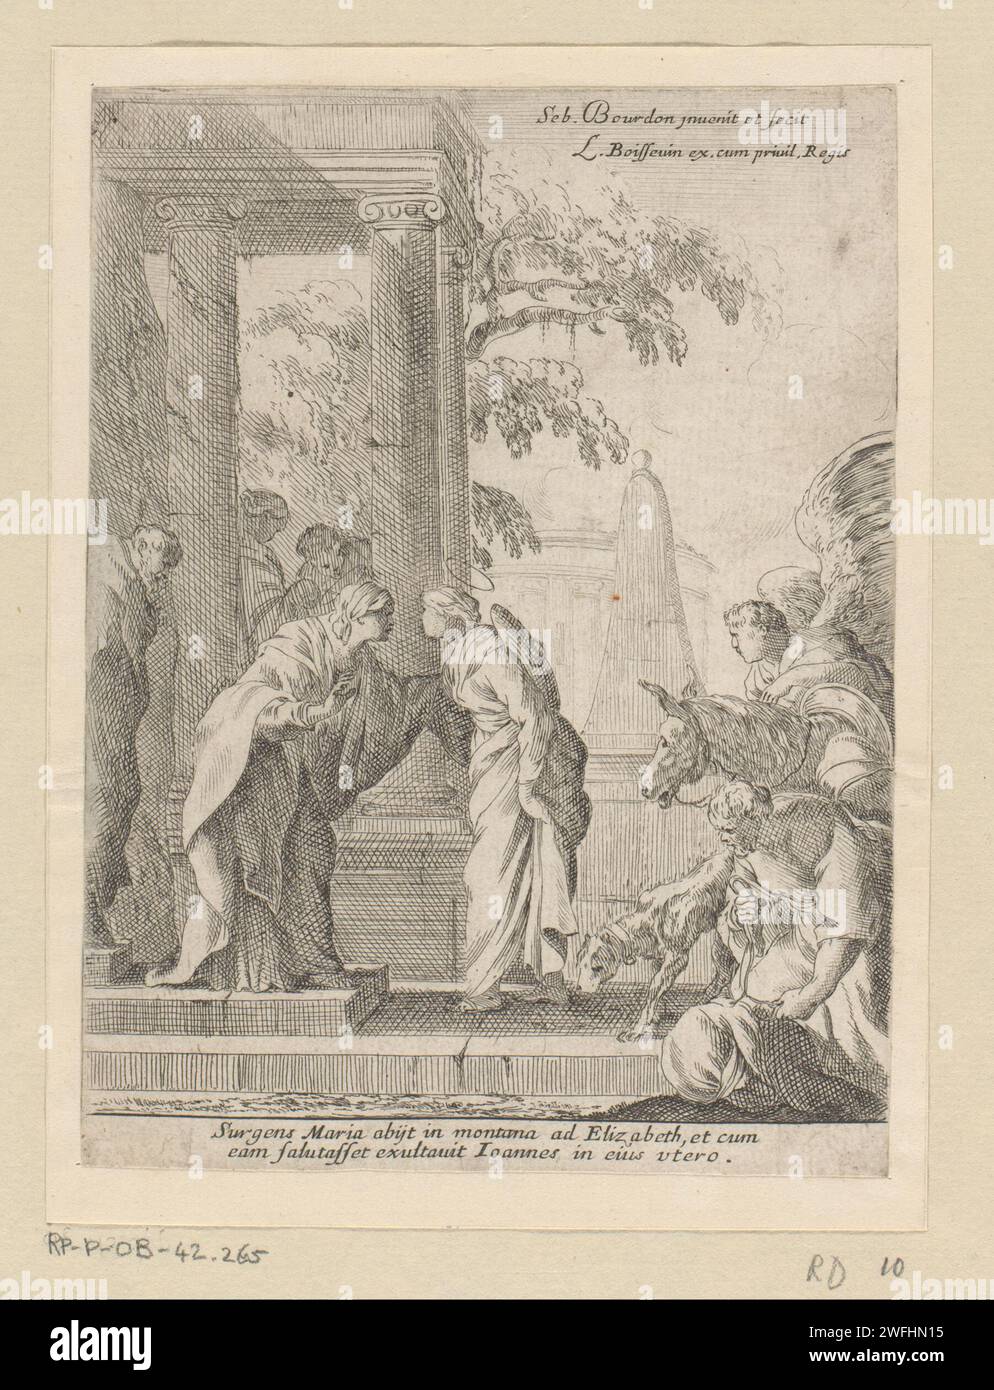 Visitation, Sébastien Bourdon, 1626 - 1671 print   paper etching Visitation (possibly Joseph and/or Zacharias present) (Luke 1:39-56) Stock Photo